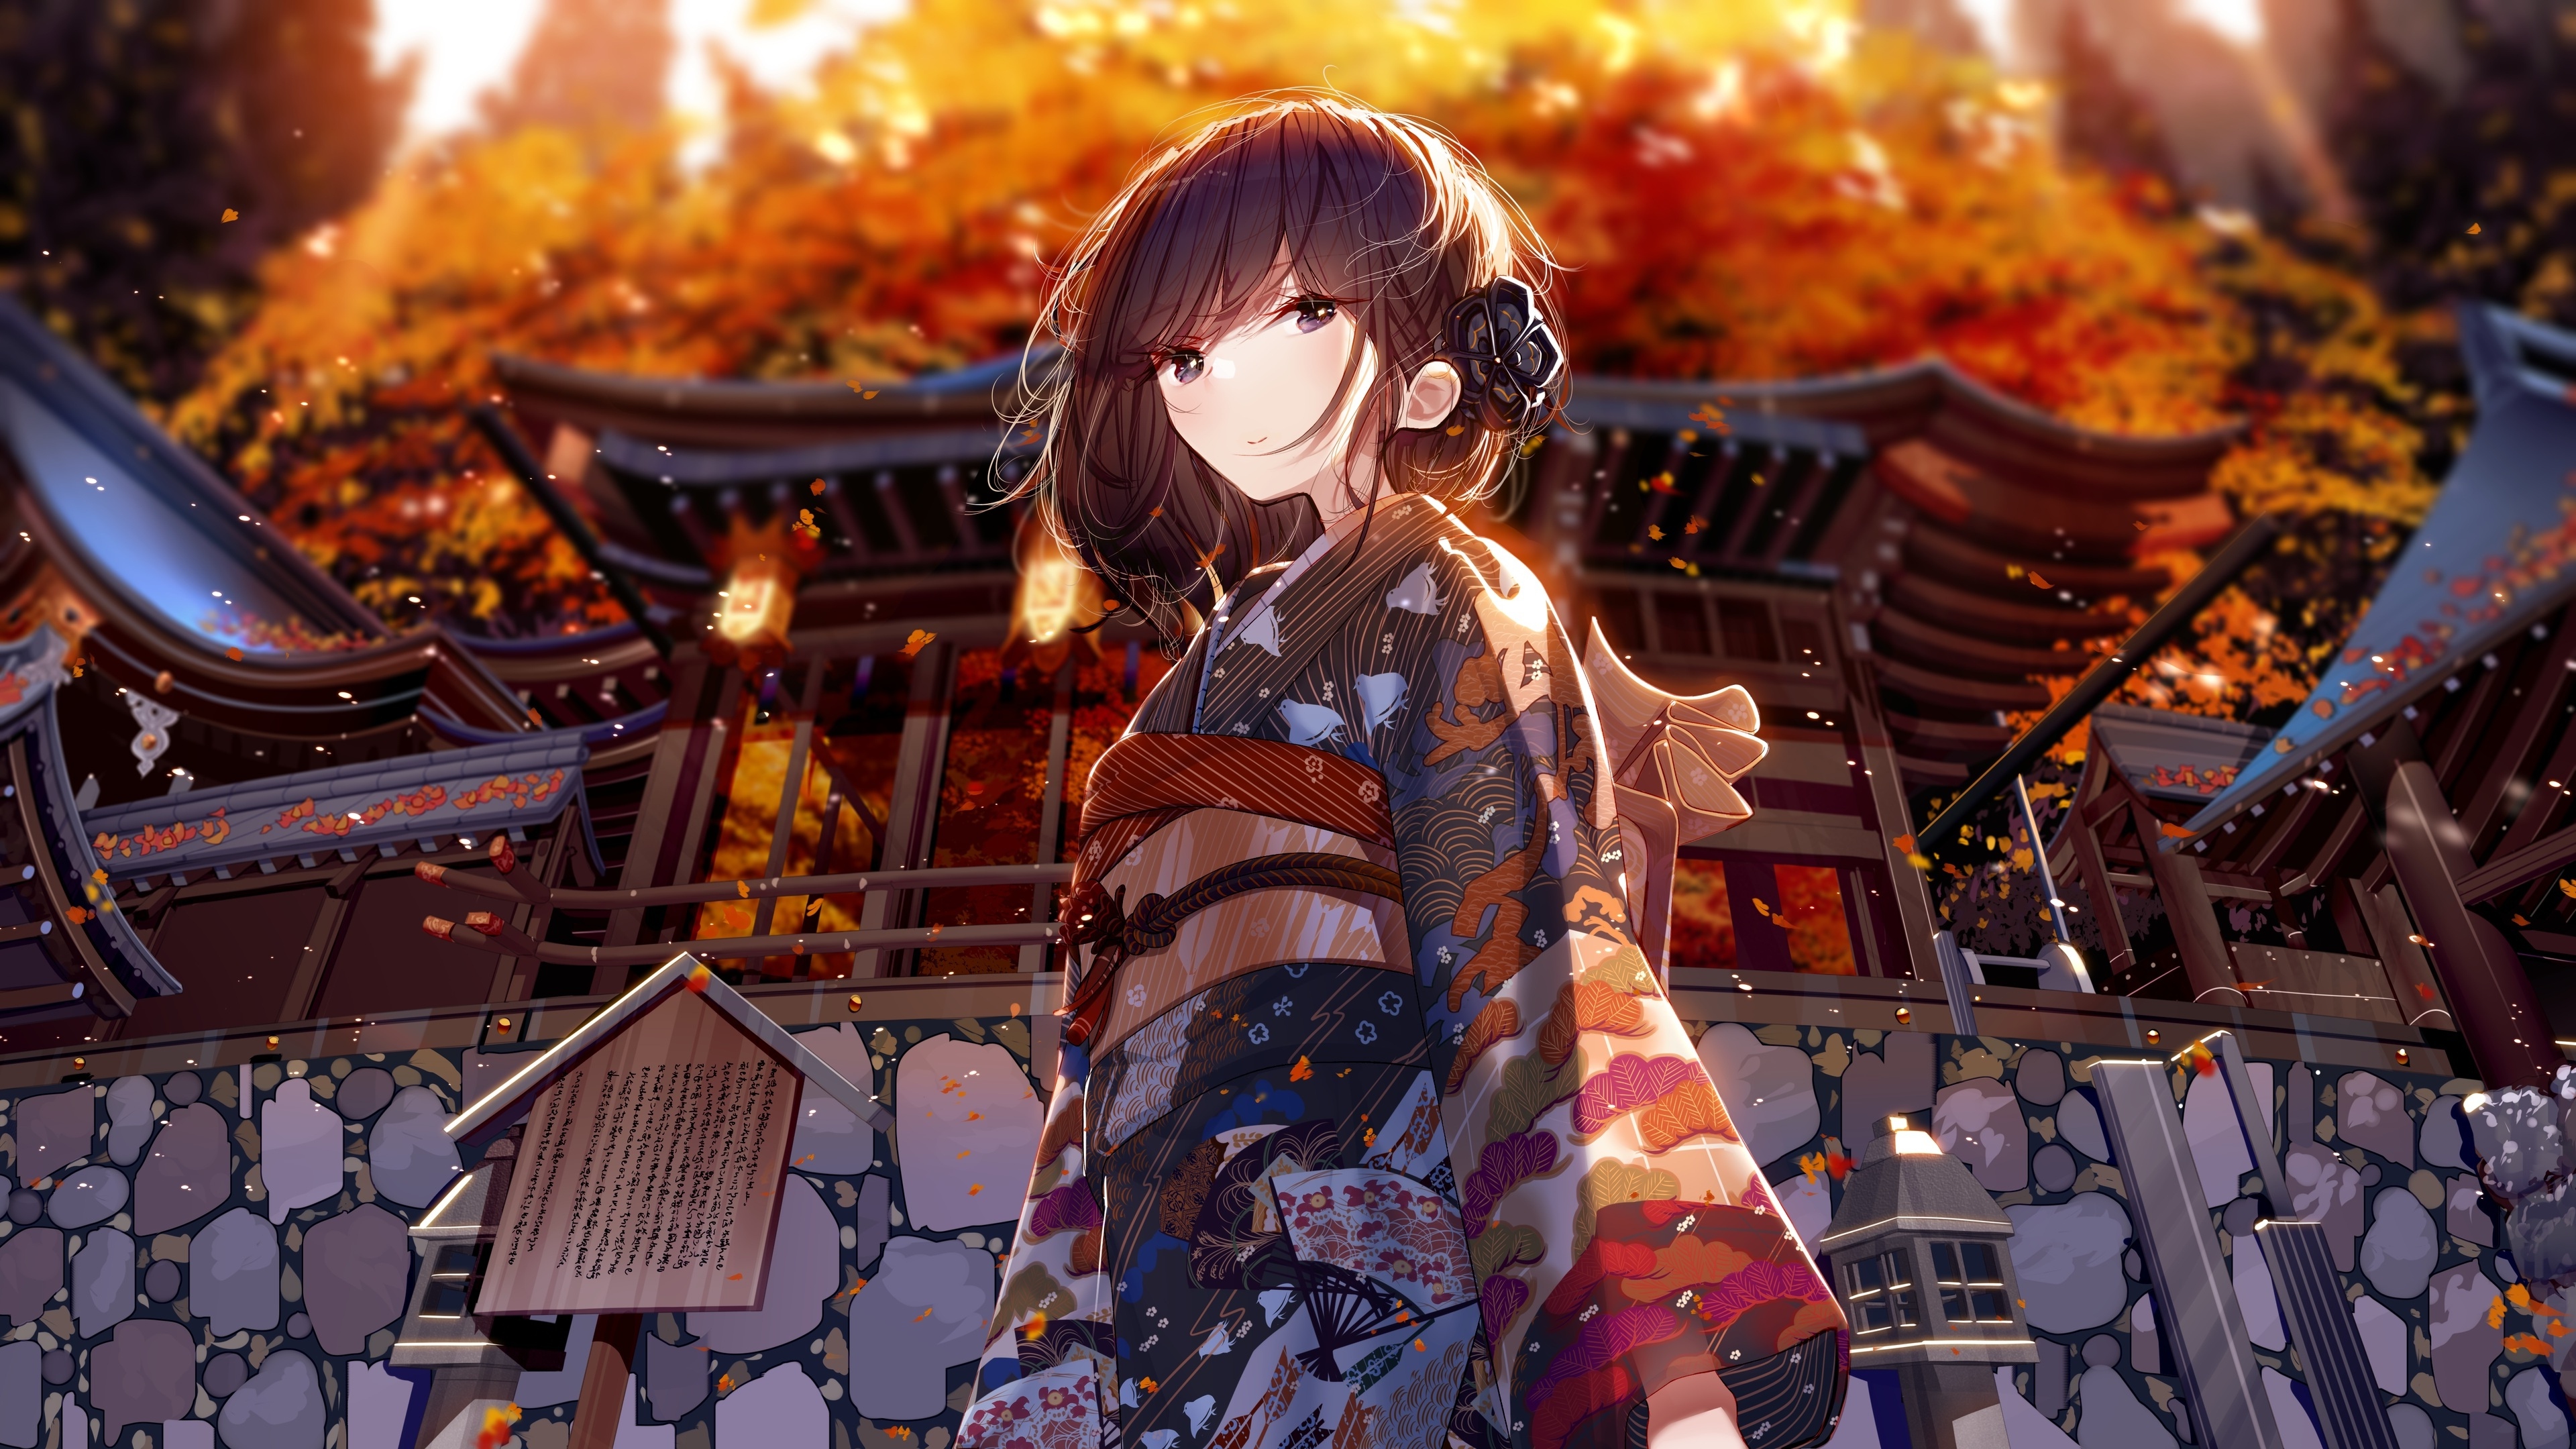 Wallpaper Autumn, Shrine, Kimono, Festival, Japanese Building:3840x2160